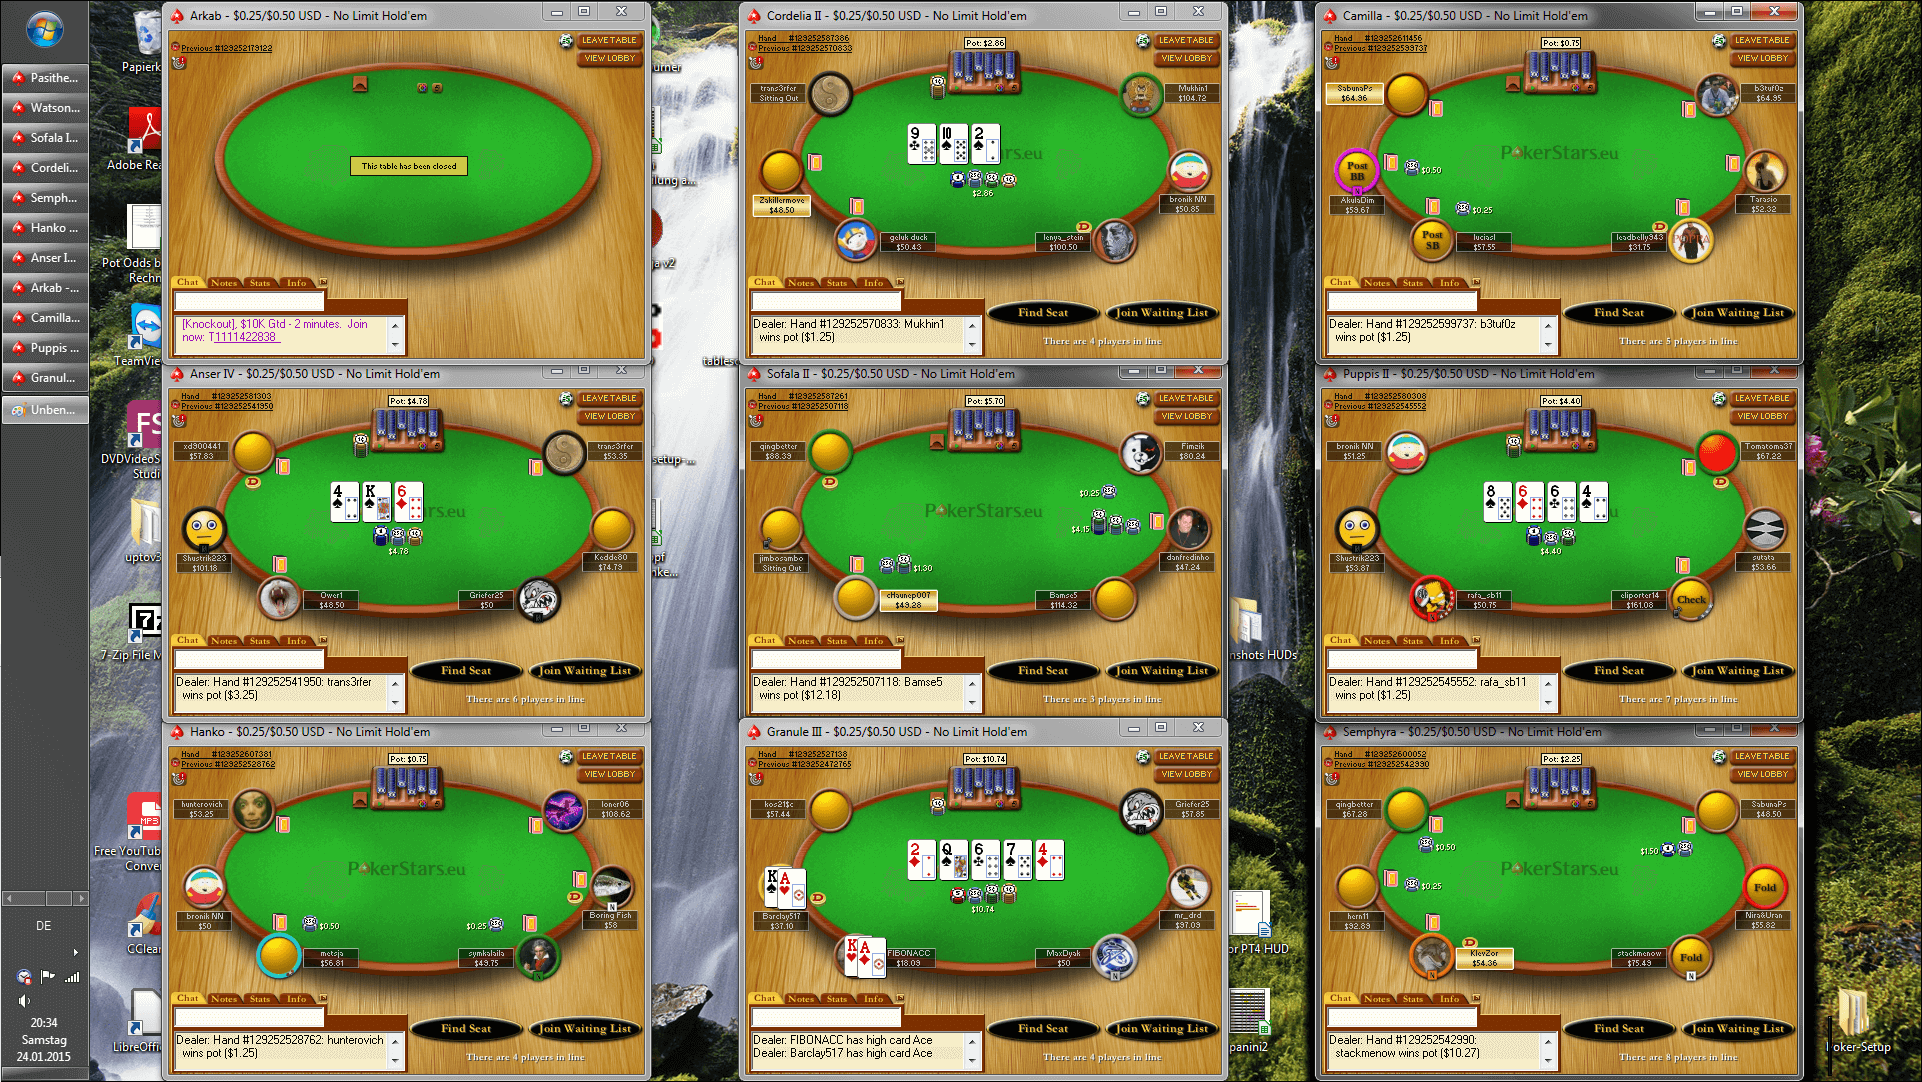 Tischanordnung Poker - FullHD(3x3)